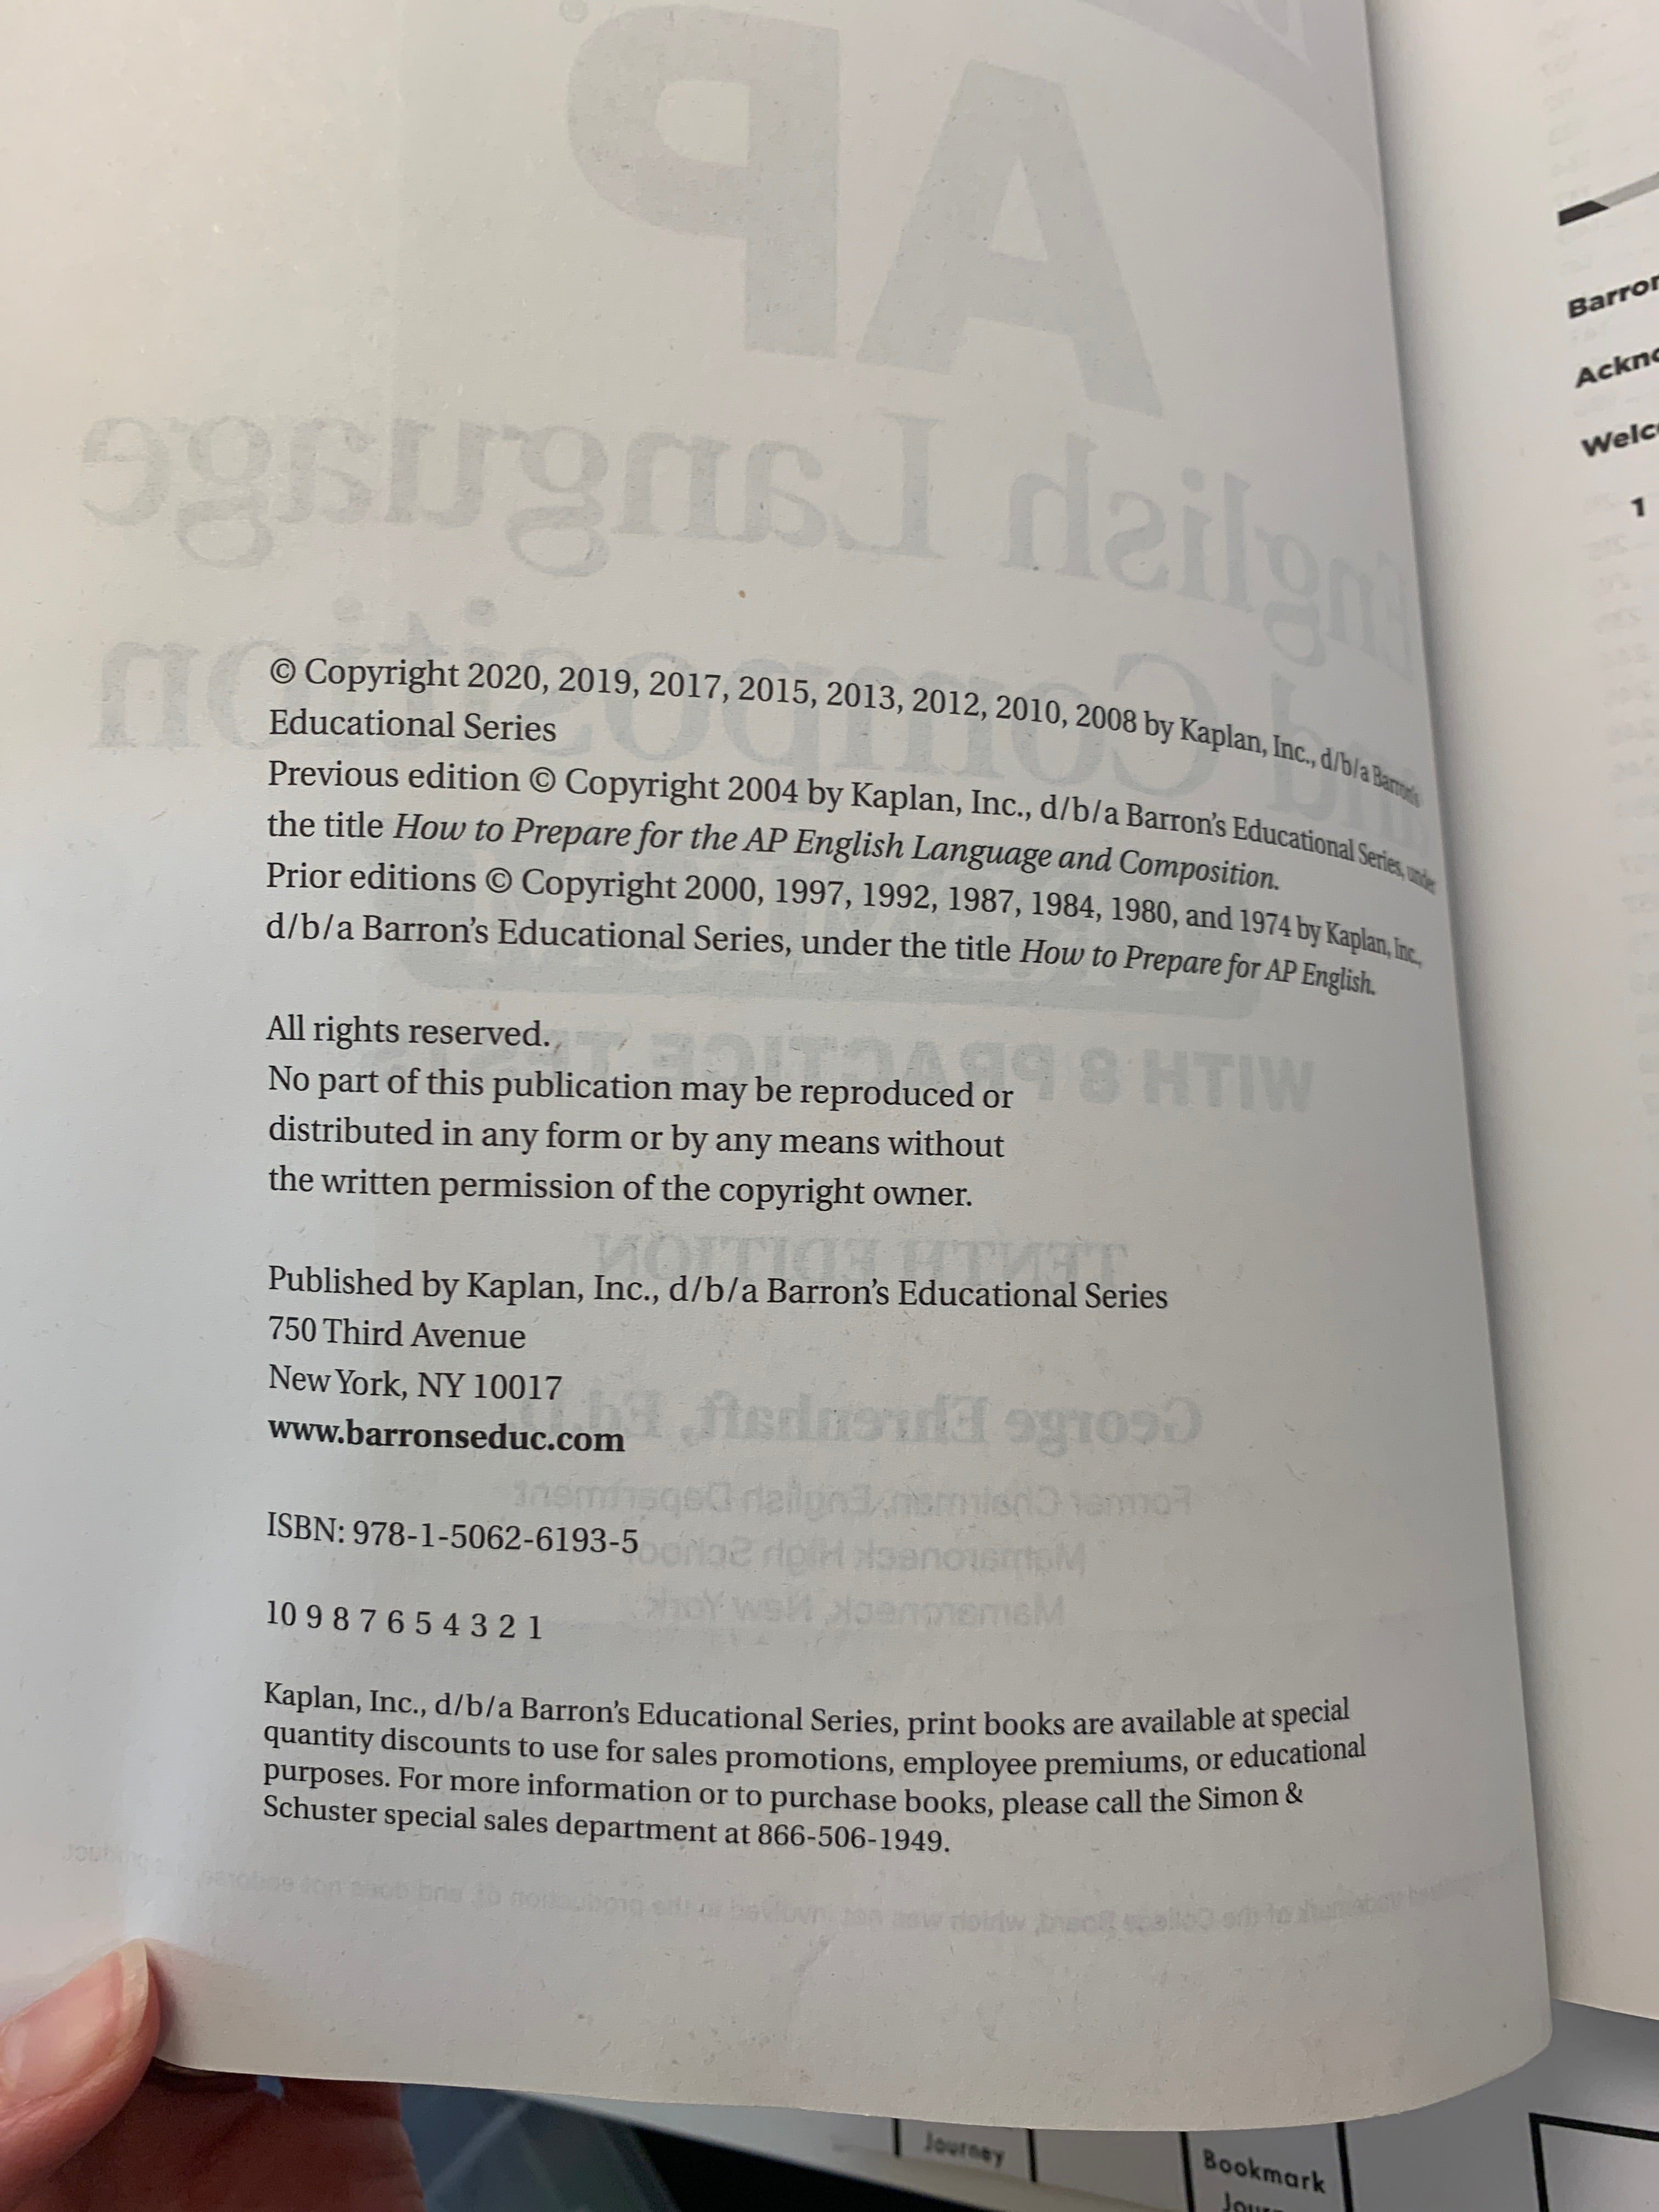 Premium　George　Composition　Paperback　Language　Ehrenhaft,　English　by　and　AP　Pangobooks